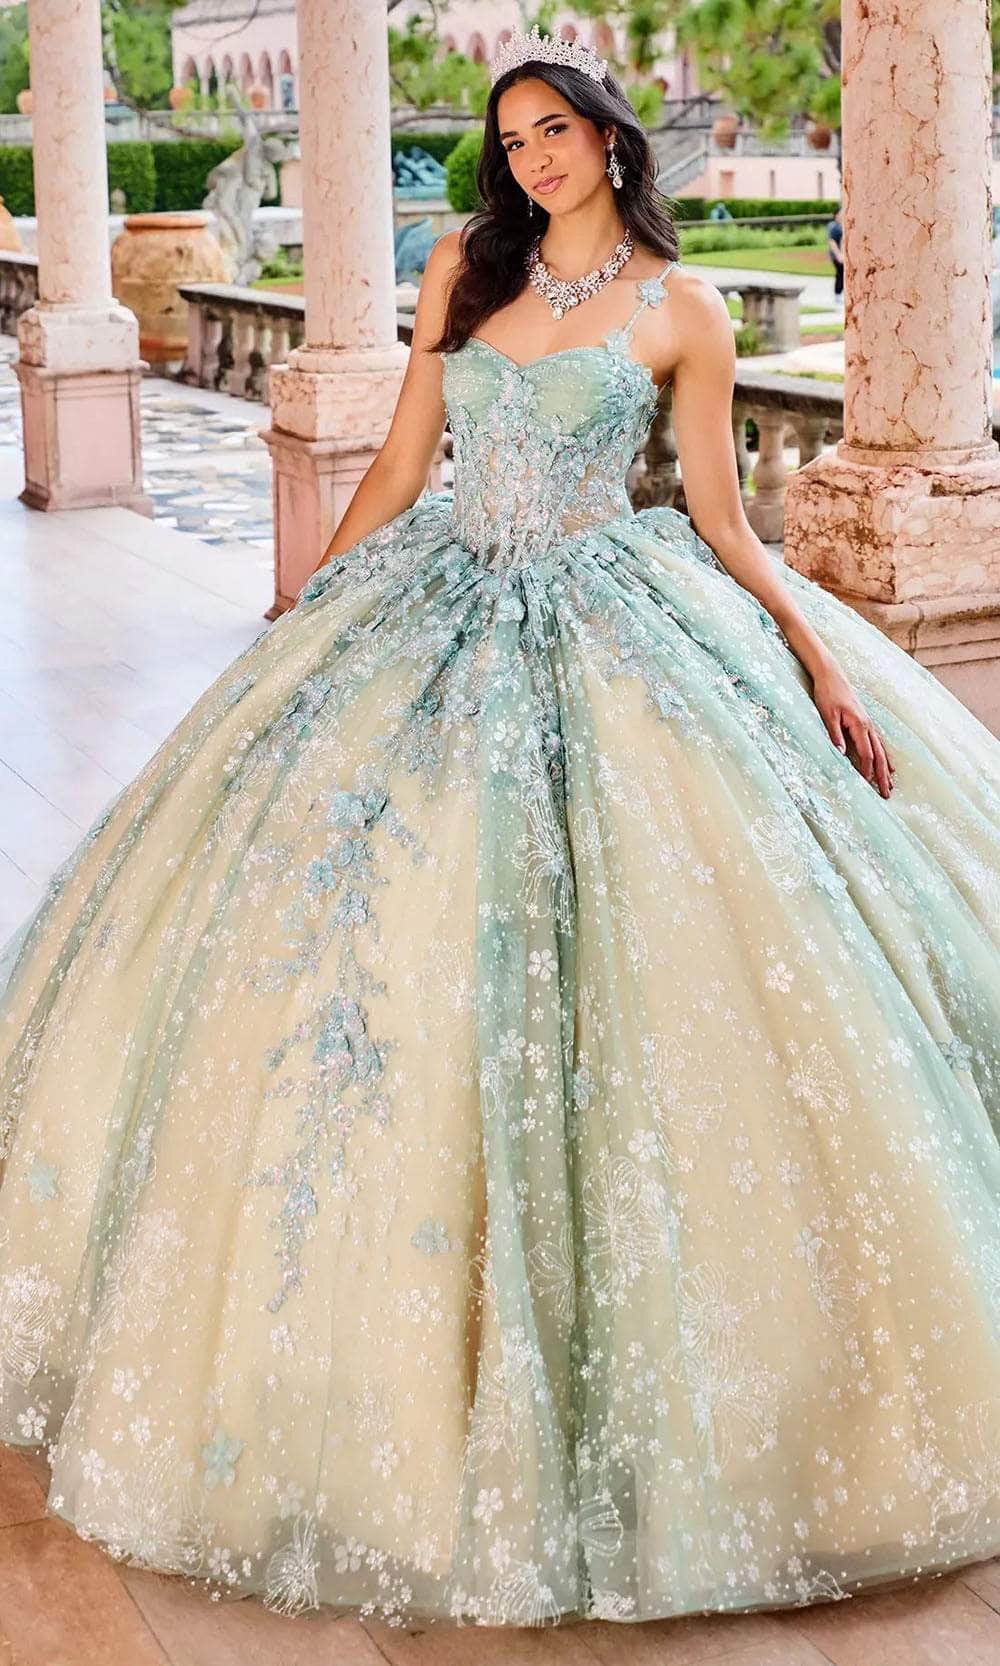 Princesa by Ariana Vara PR30158 - Corset Bodice Sleeveless Gown Prom Dresses 00 / Sage/Champagne